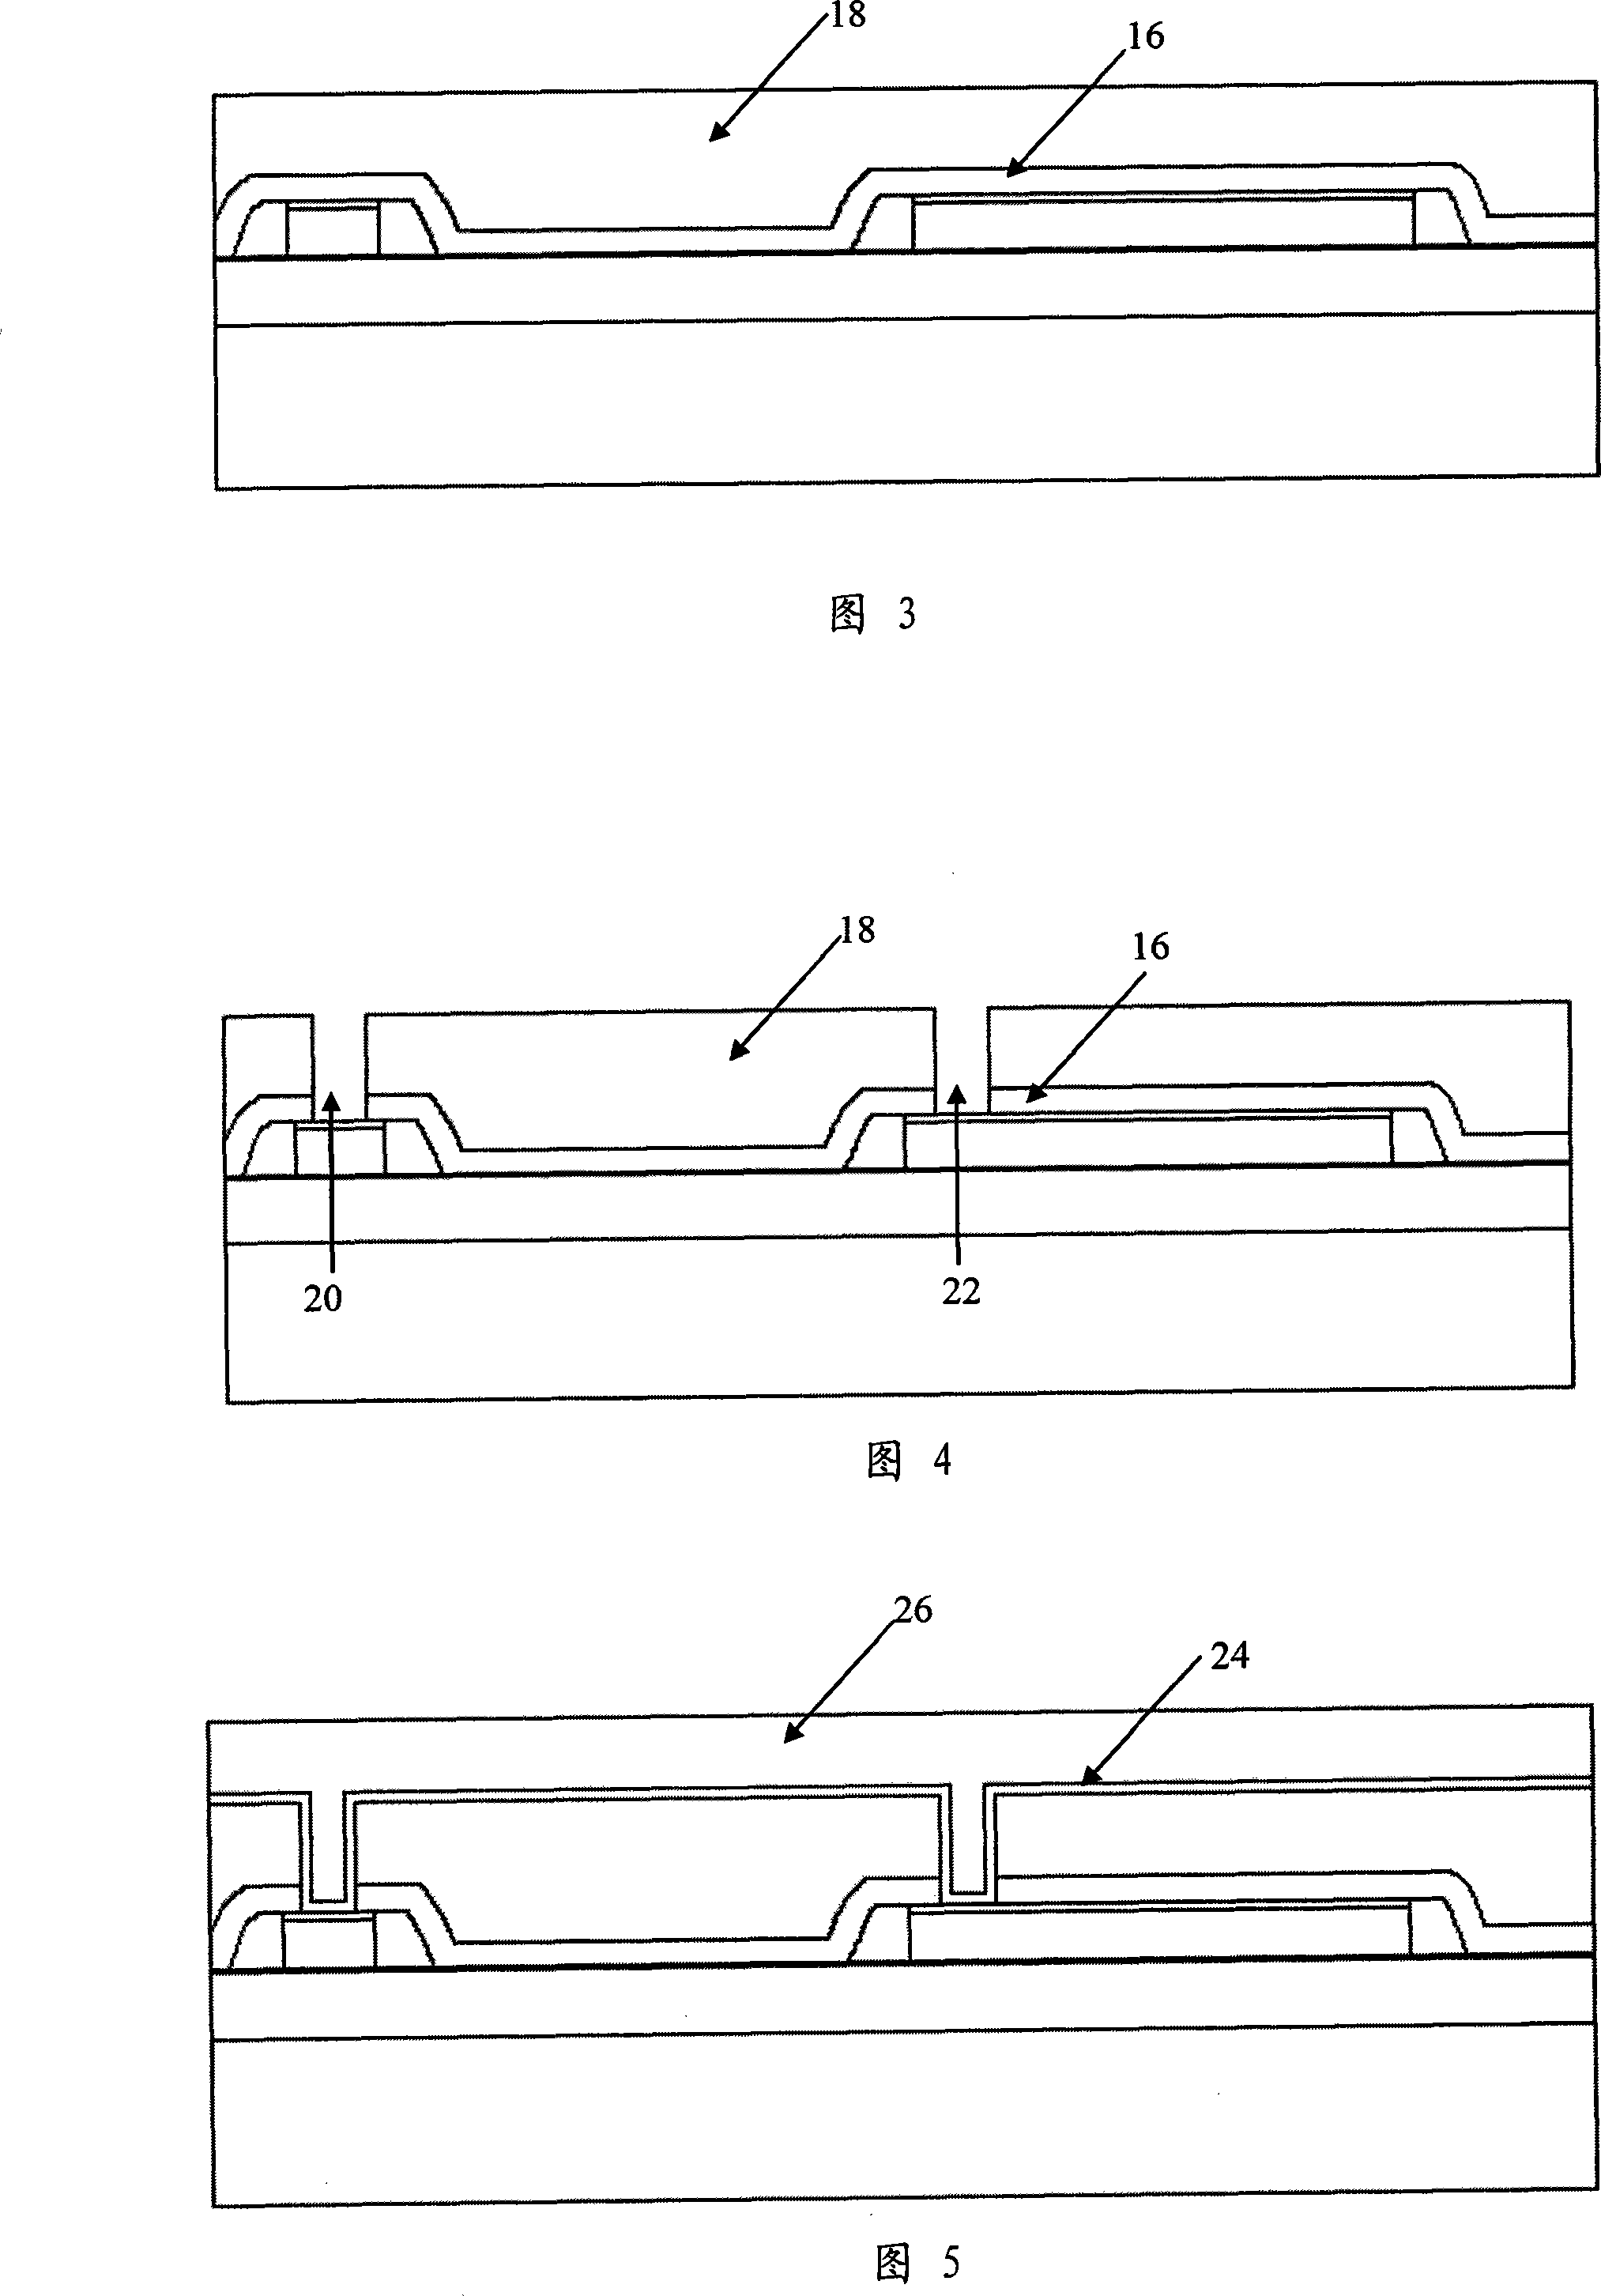 Method for forming interlaminar capacitor